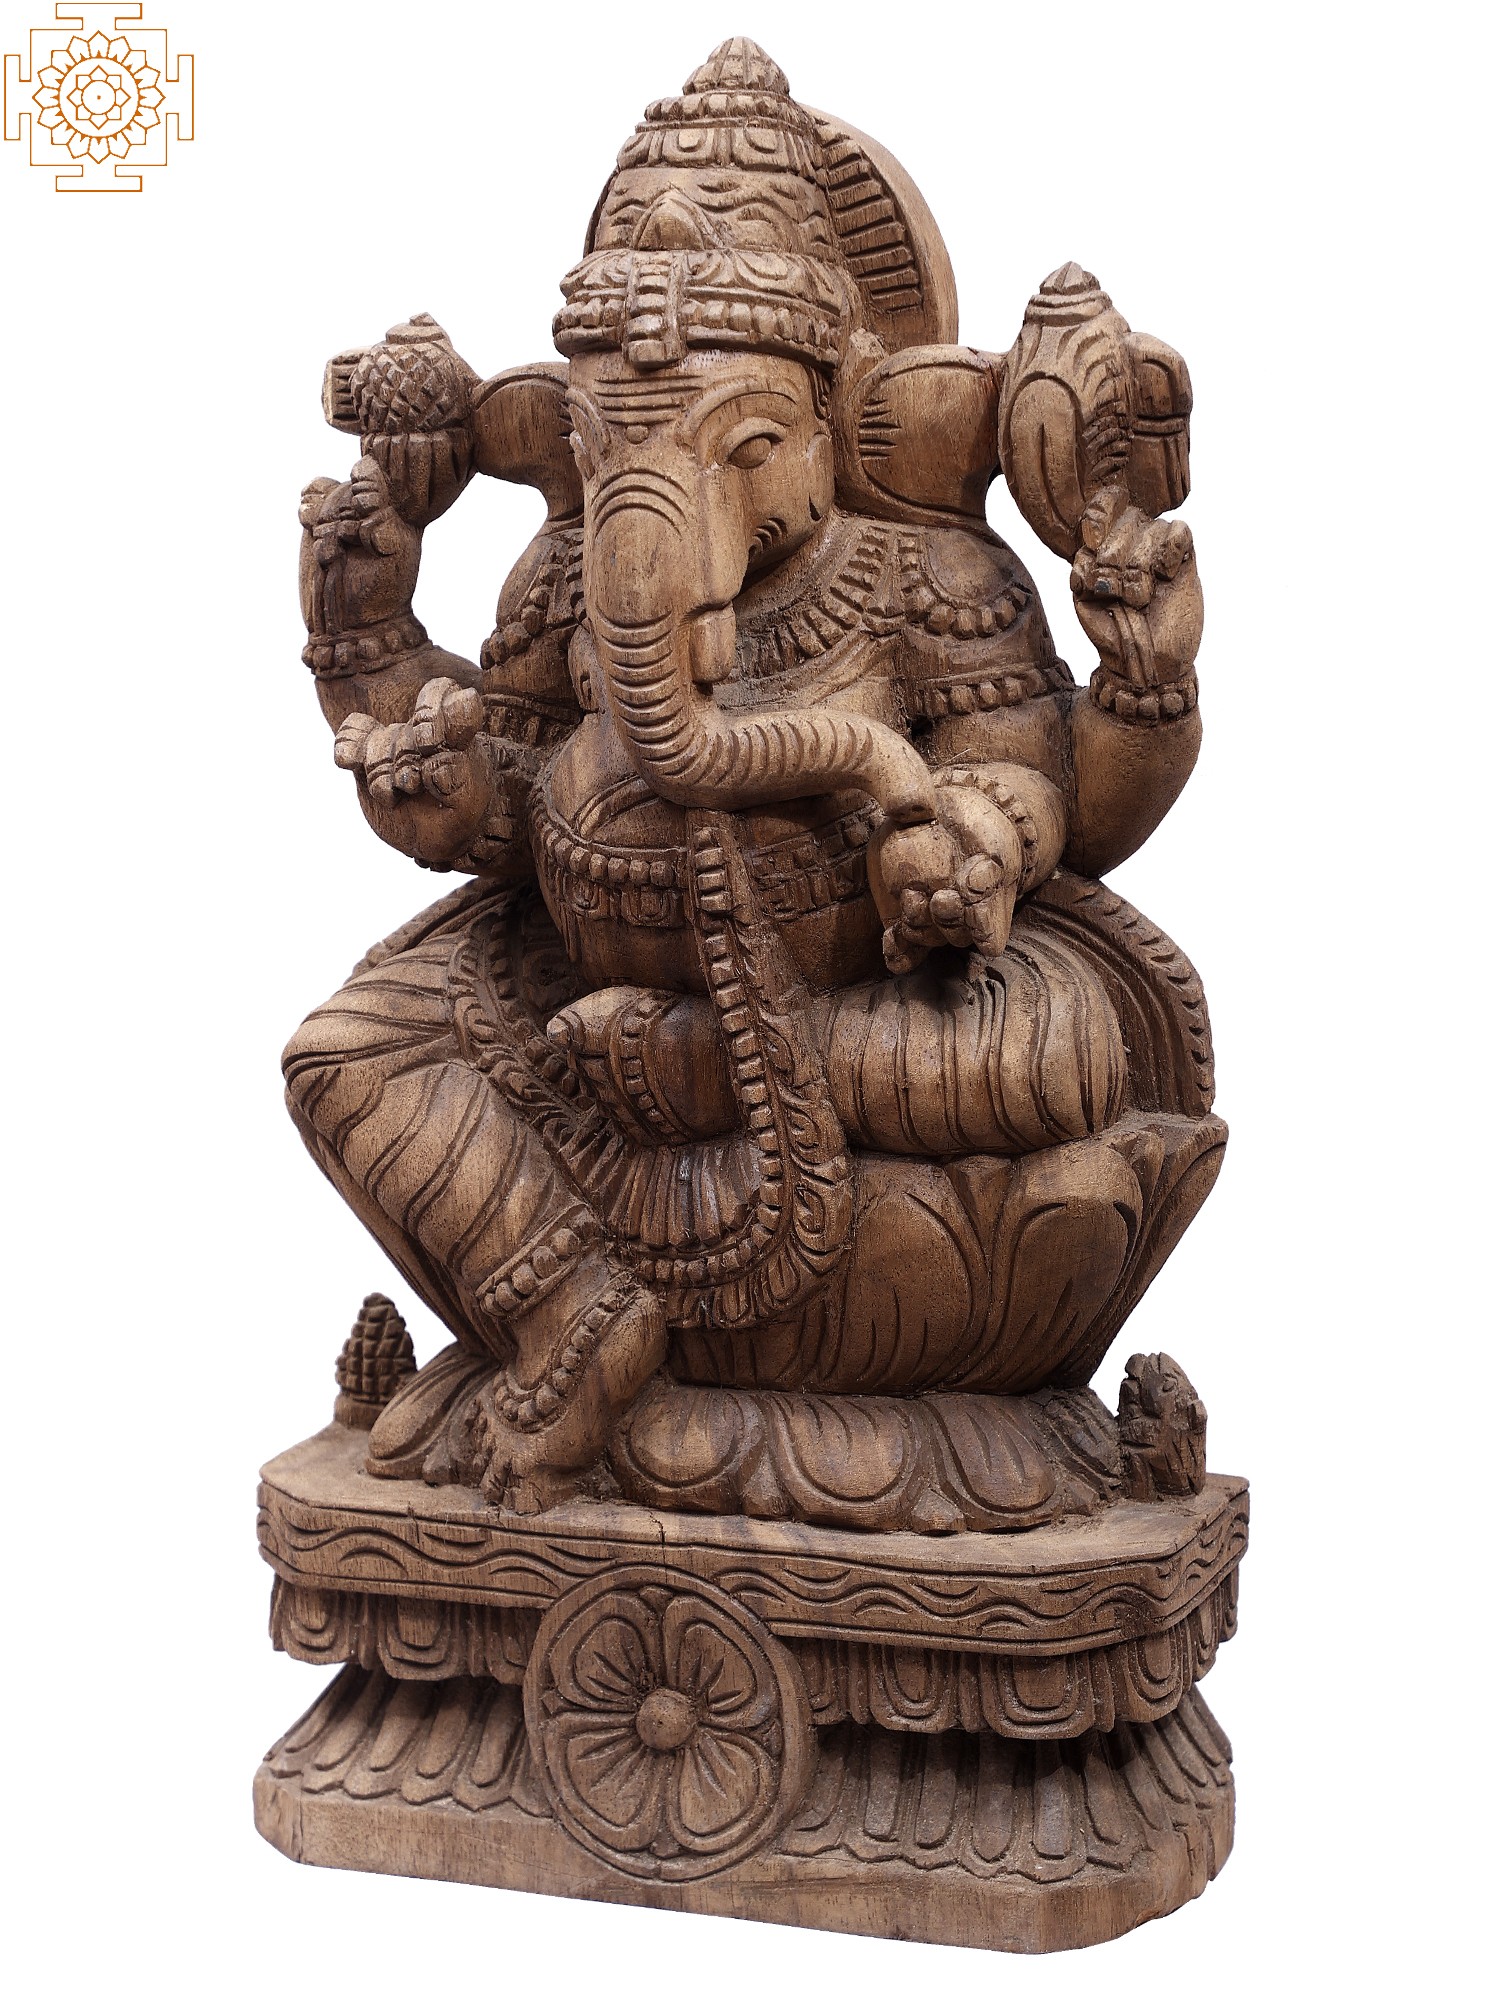 70％OFF】 Ebros Hindu Avatar Ganapati Lord Ganesha with 4 Hands Seated On  Lotus Thron好評販売中 - ortho99plus1.com